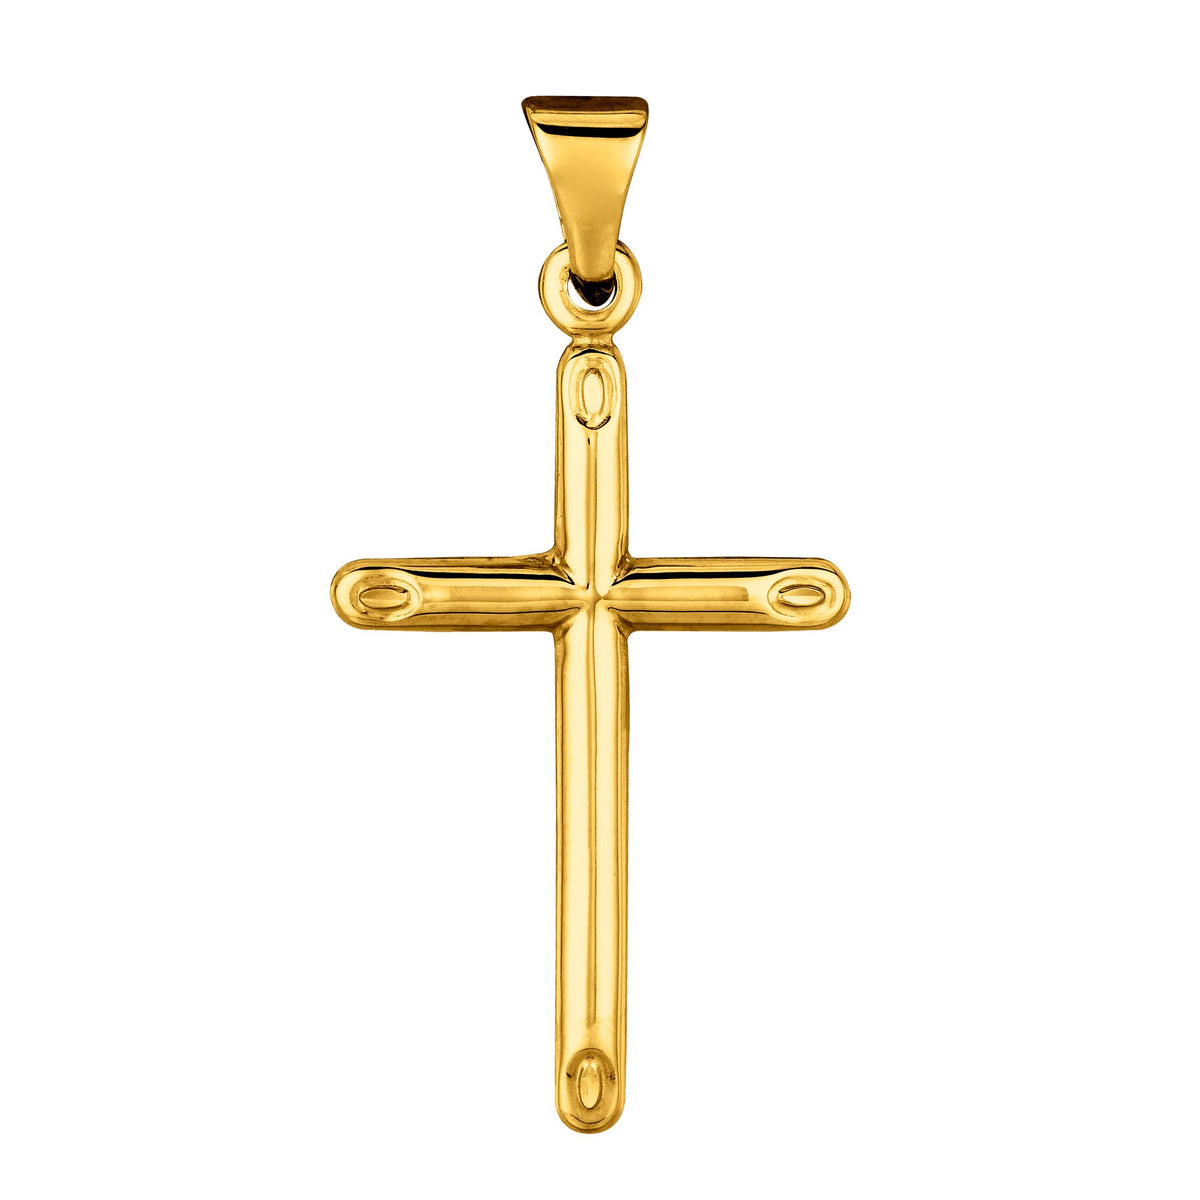 14k Yellow Gold Shiny Round Tube Cross Pendant fine designer jewelry for men and women